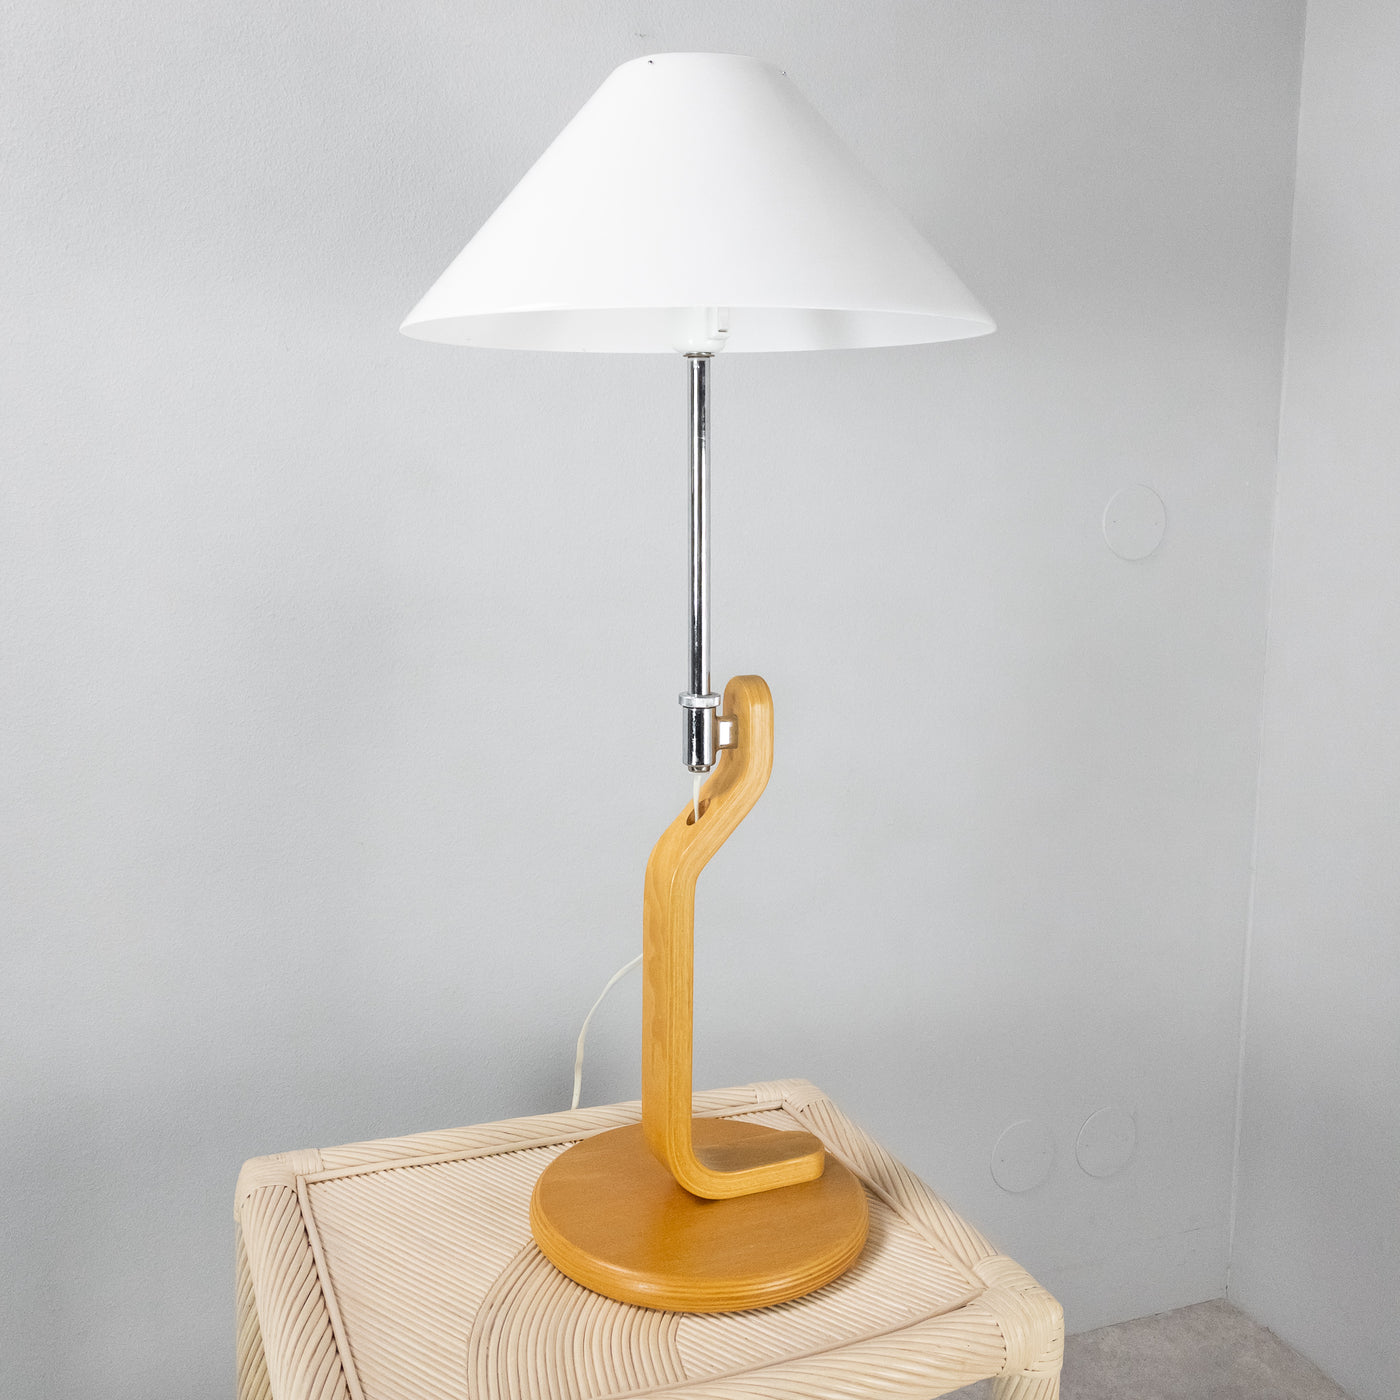 Lampa "Grevie" Ateljé Lyktan